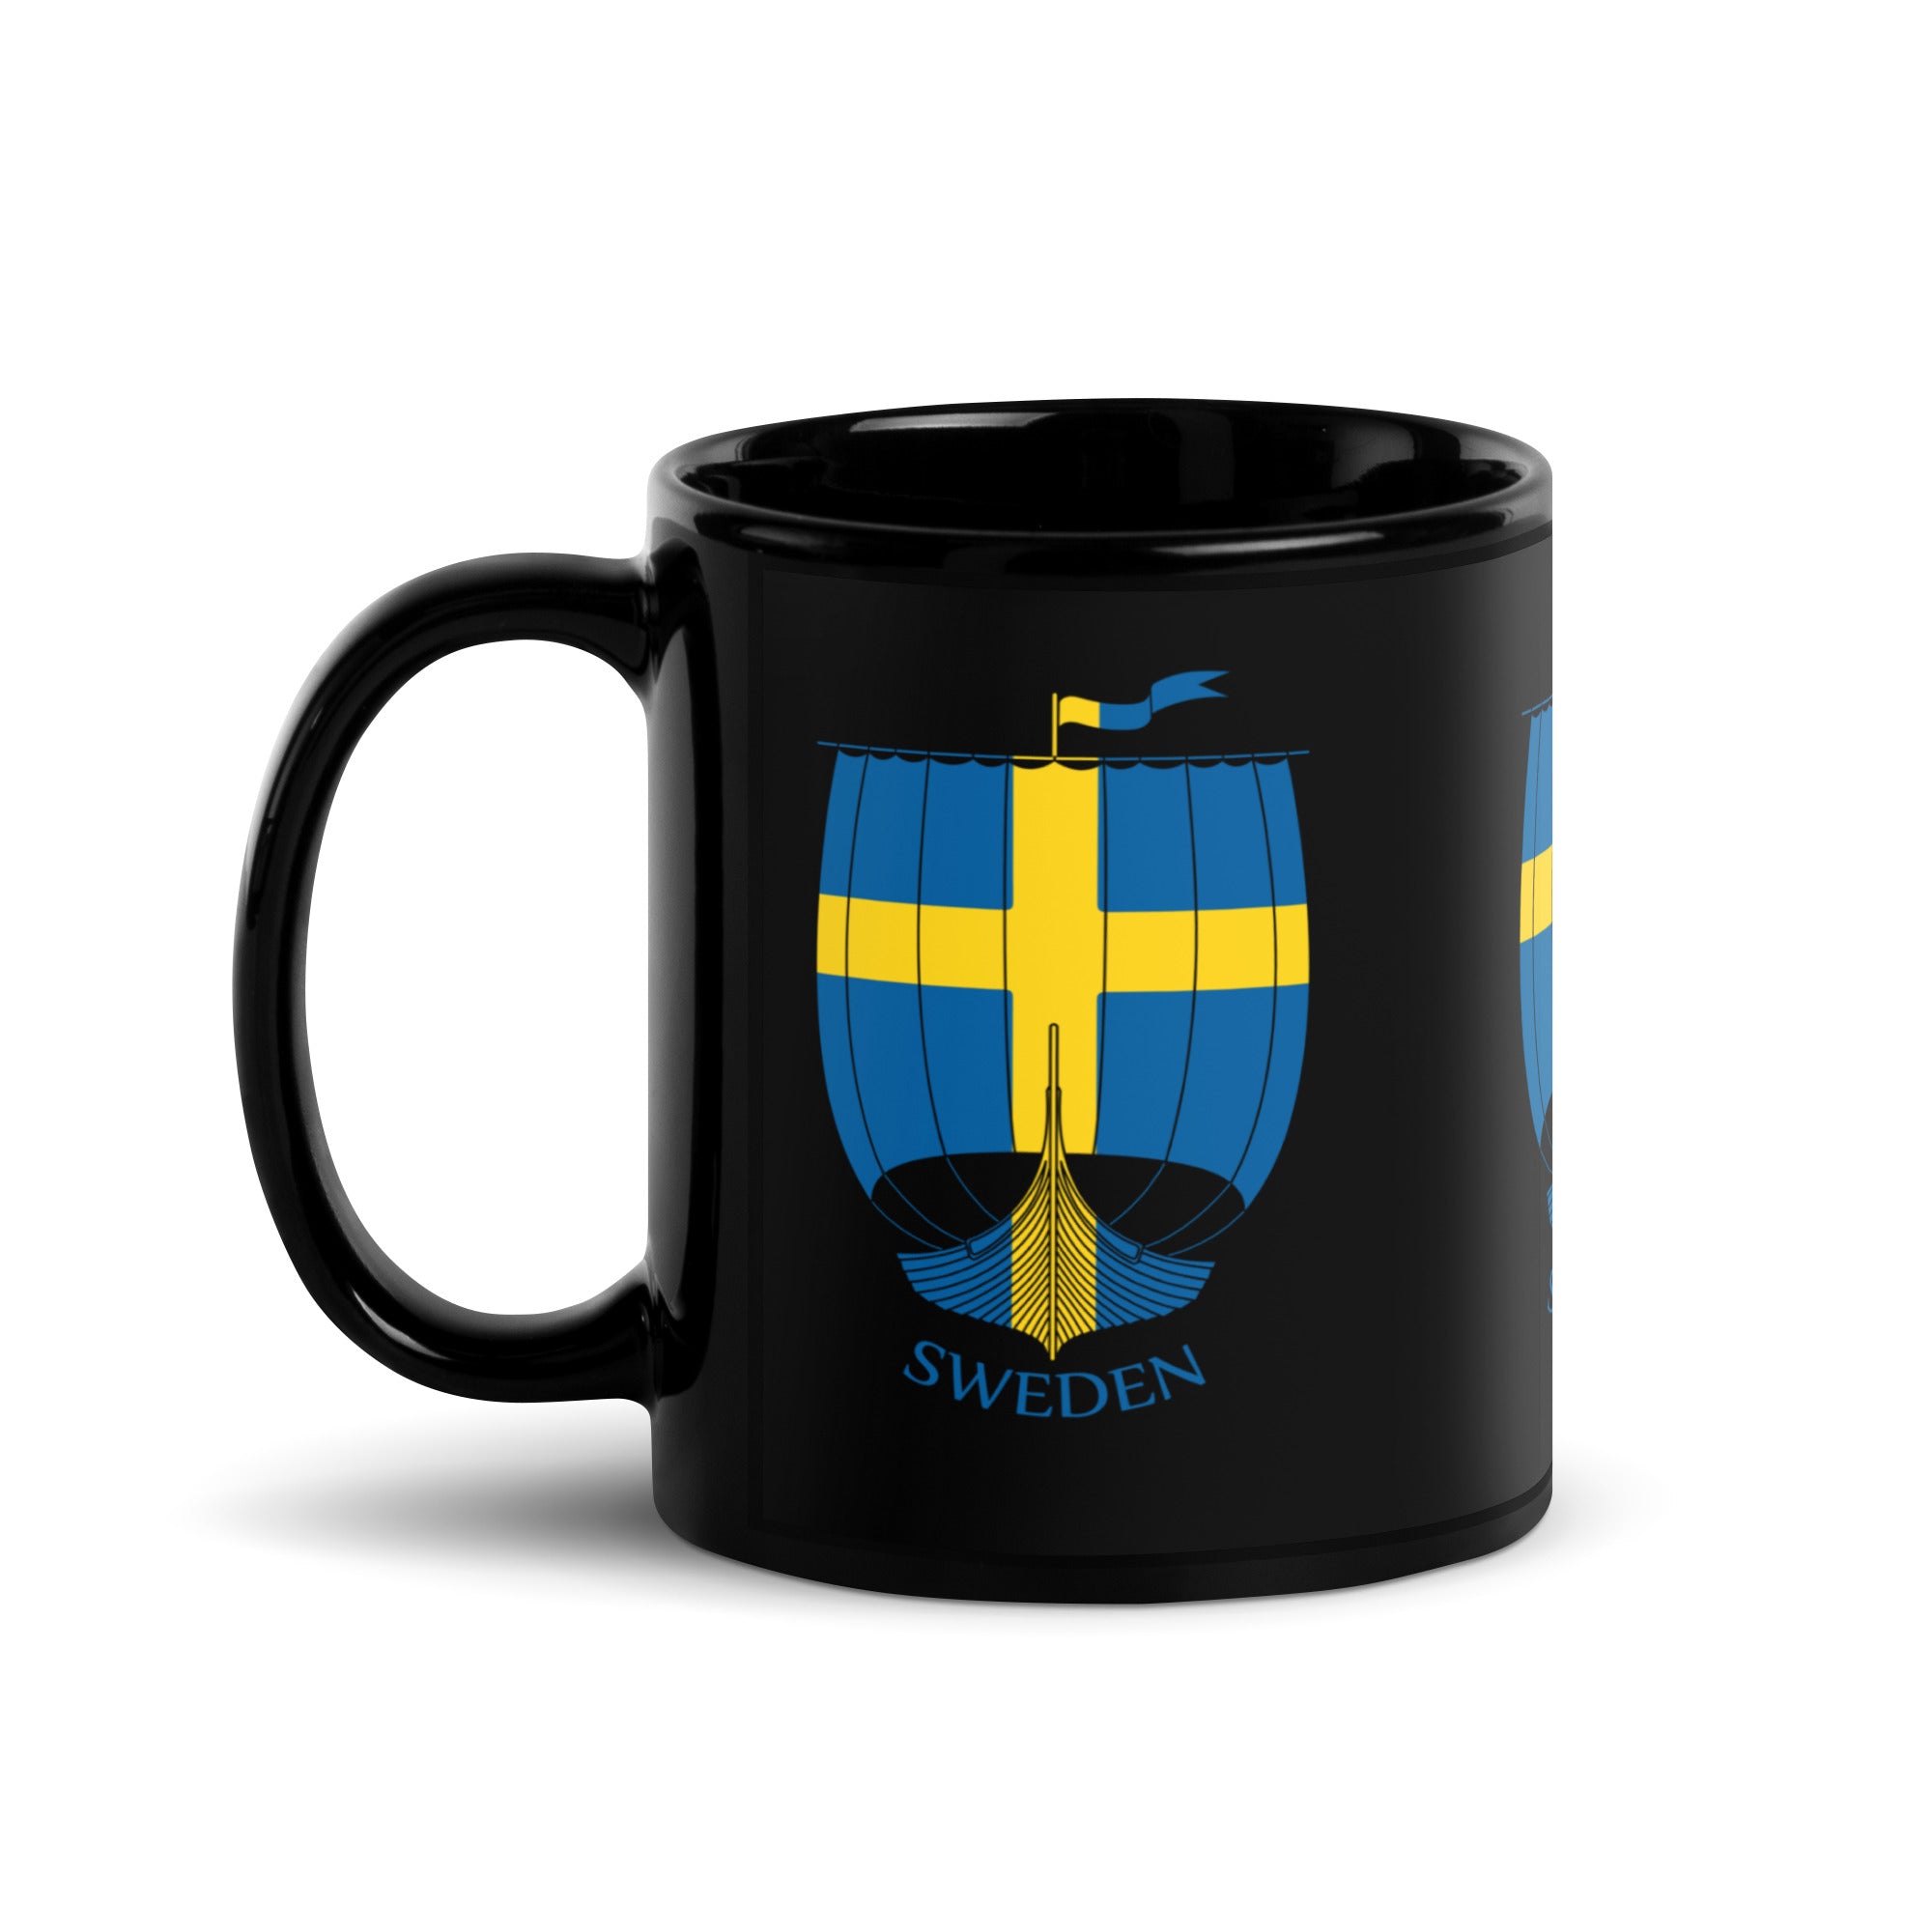 Sweden Viking Ship Mug